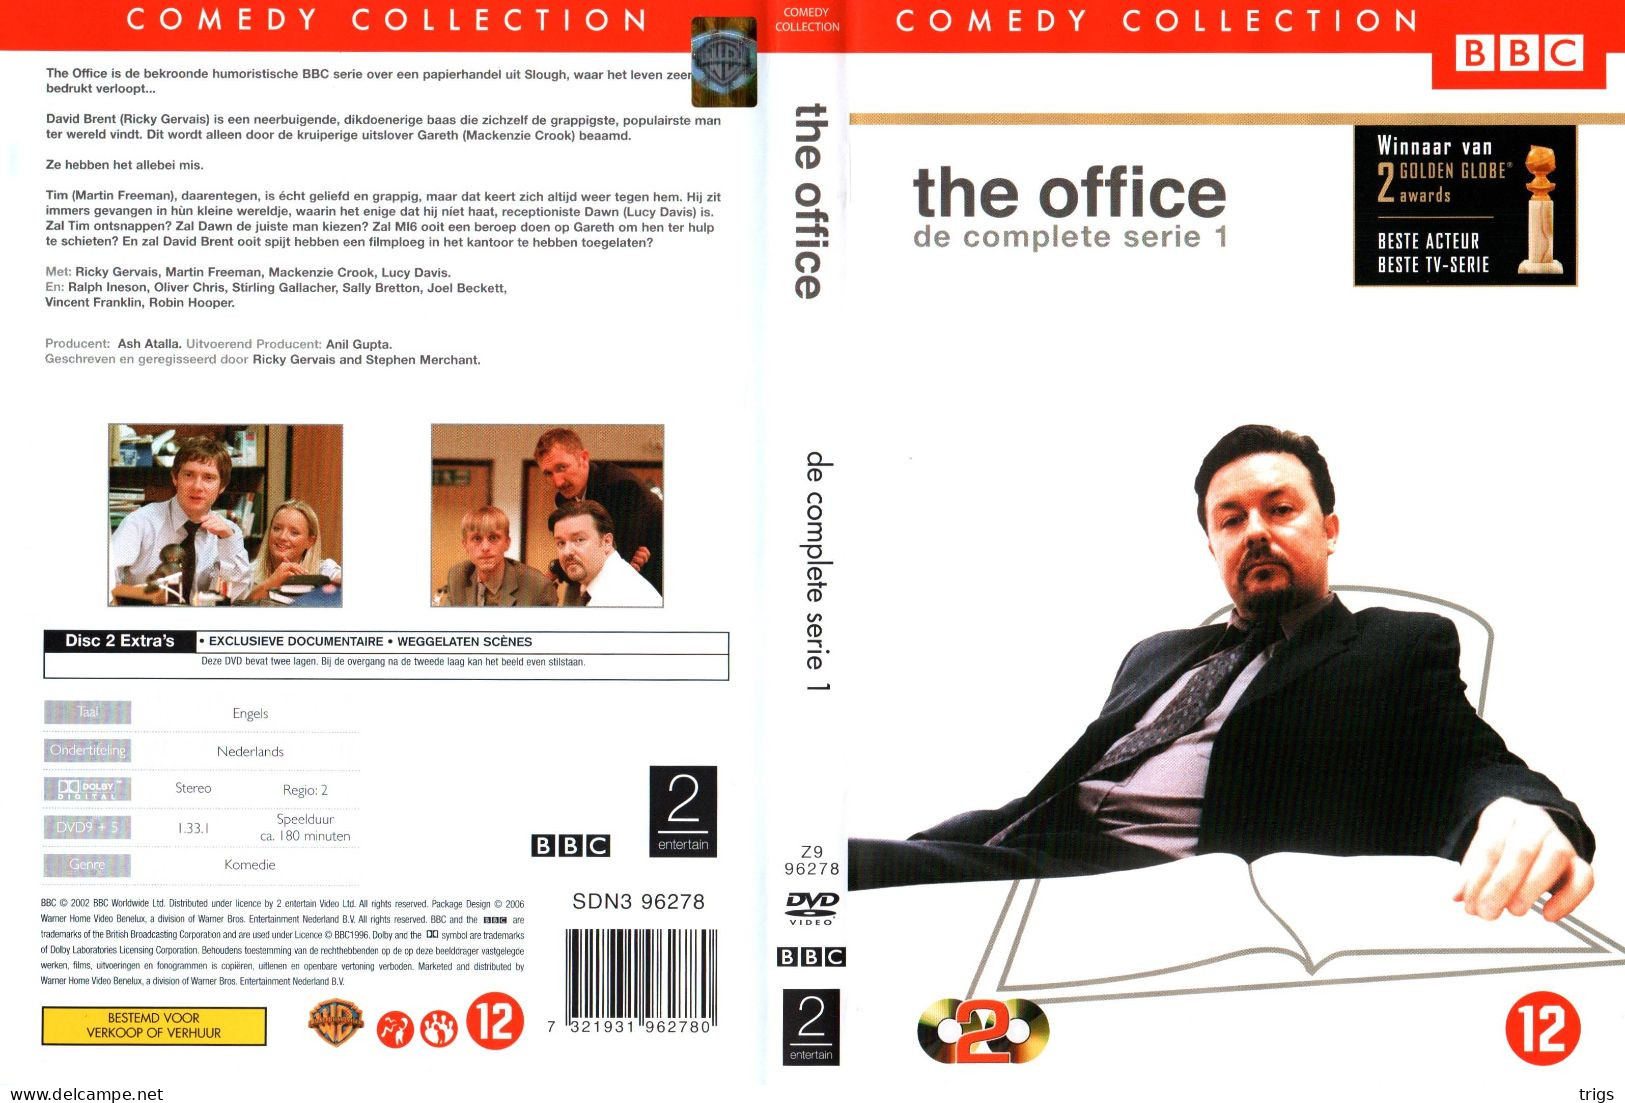 DVD - The Office: De Complete Serie 1 (2 DISCS) - Series Y Programas De TV